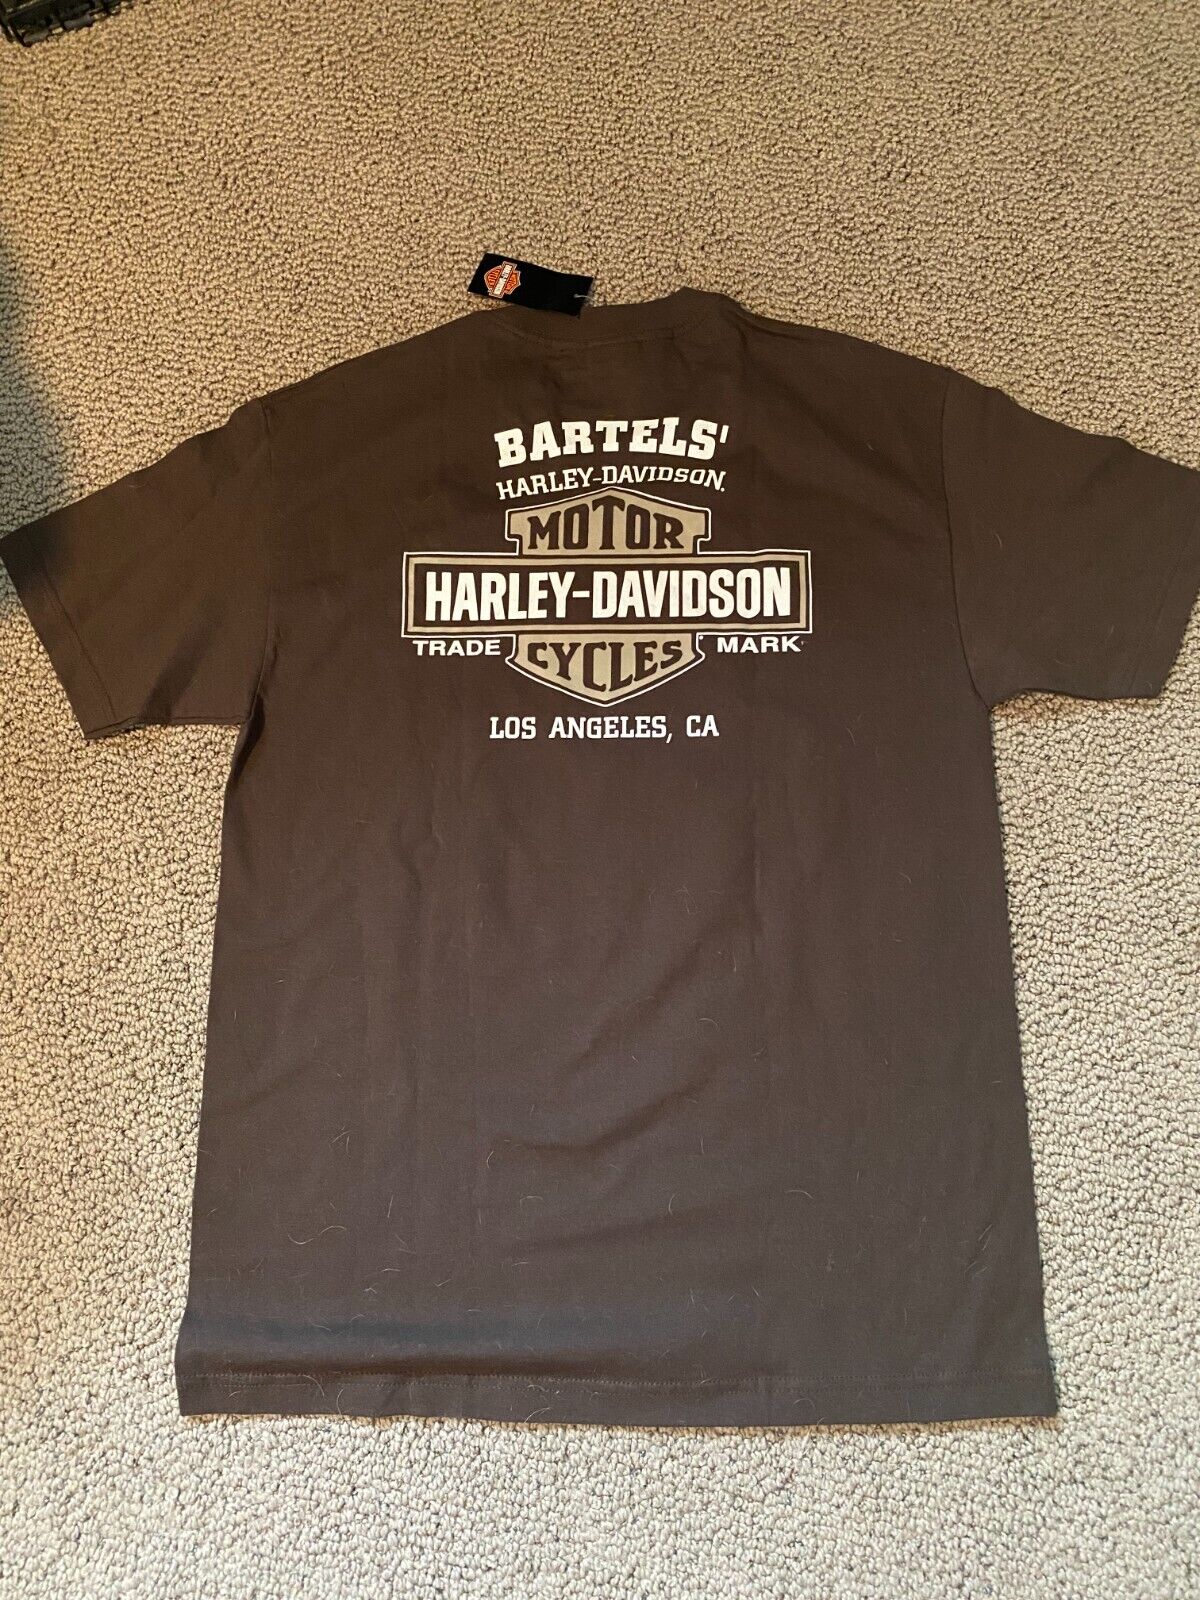 Harley-Davidson Bartels T-Shirt - NEW